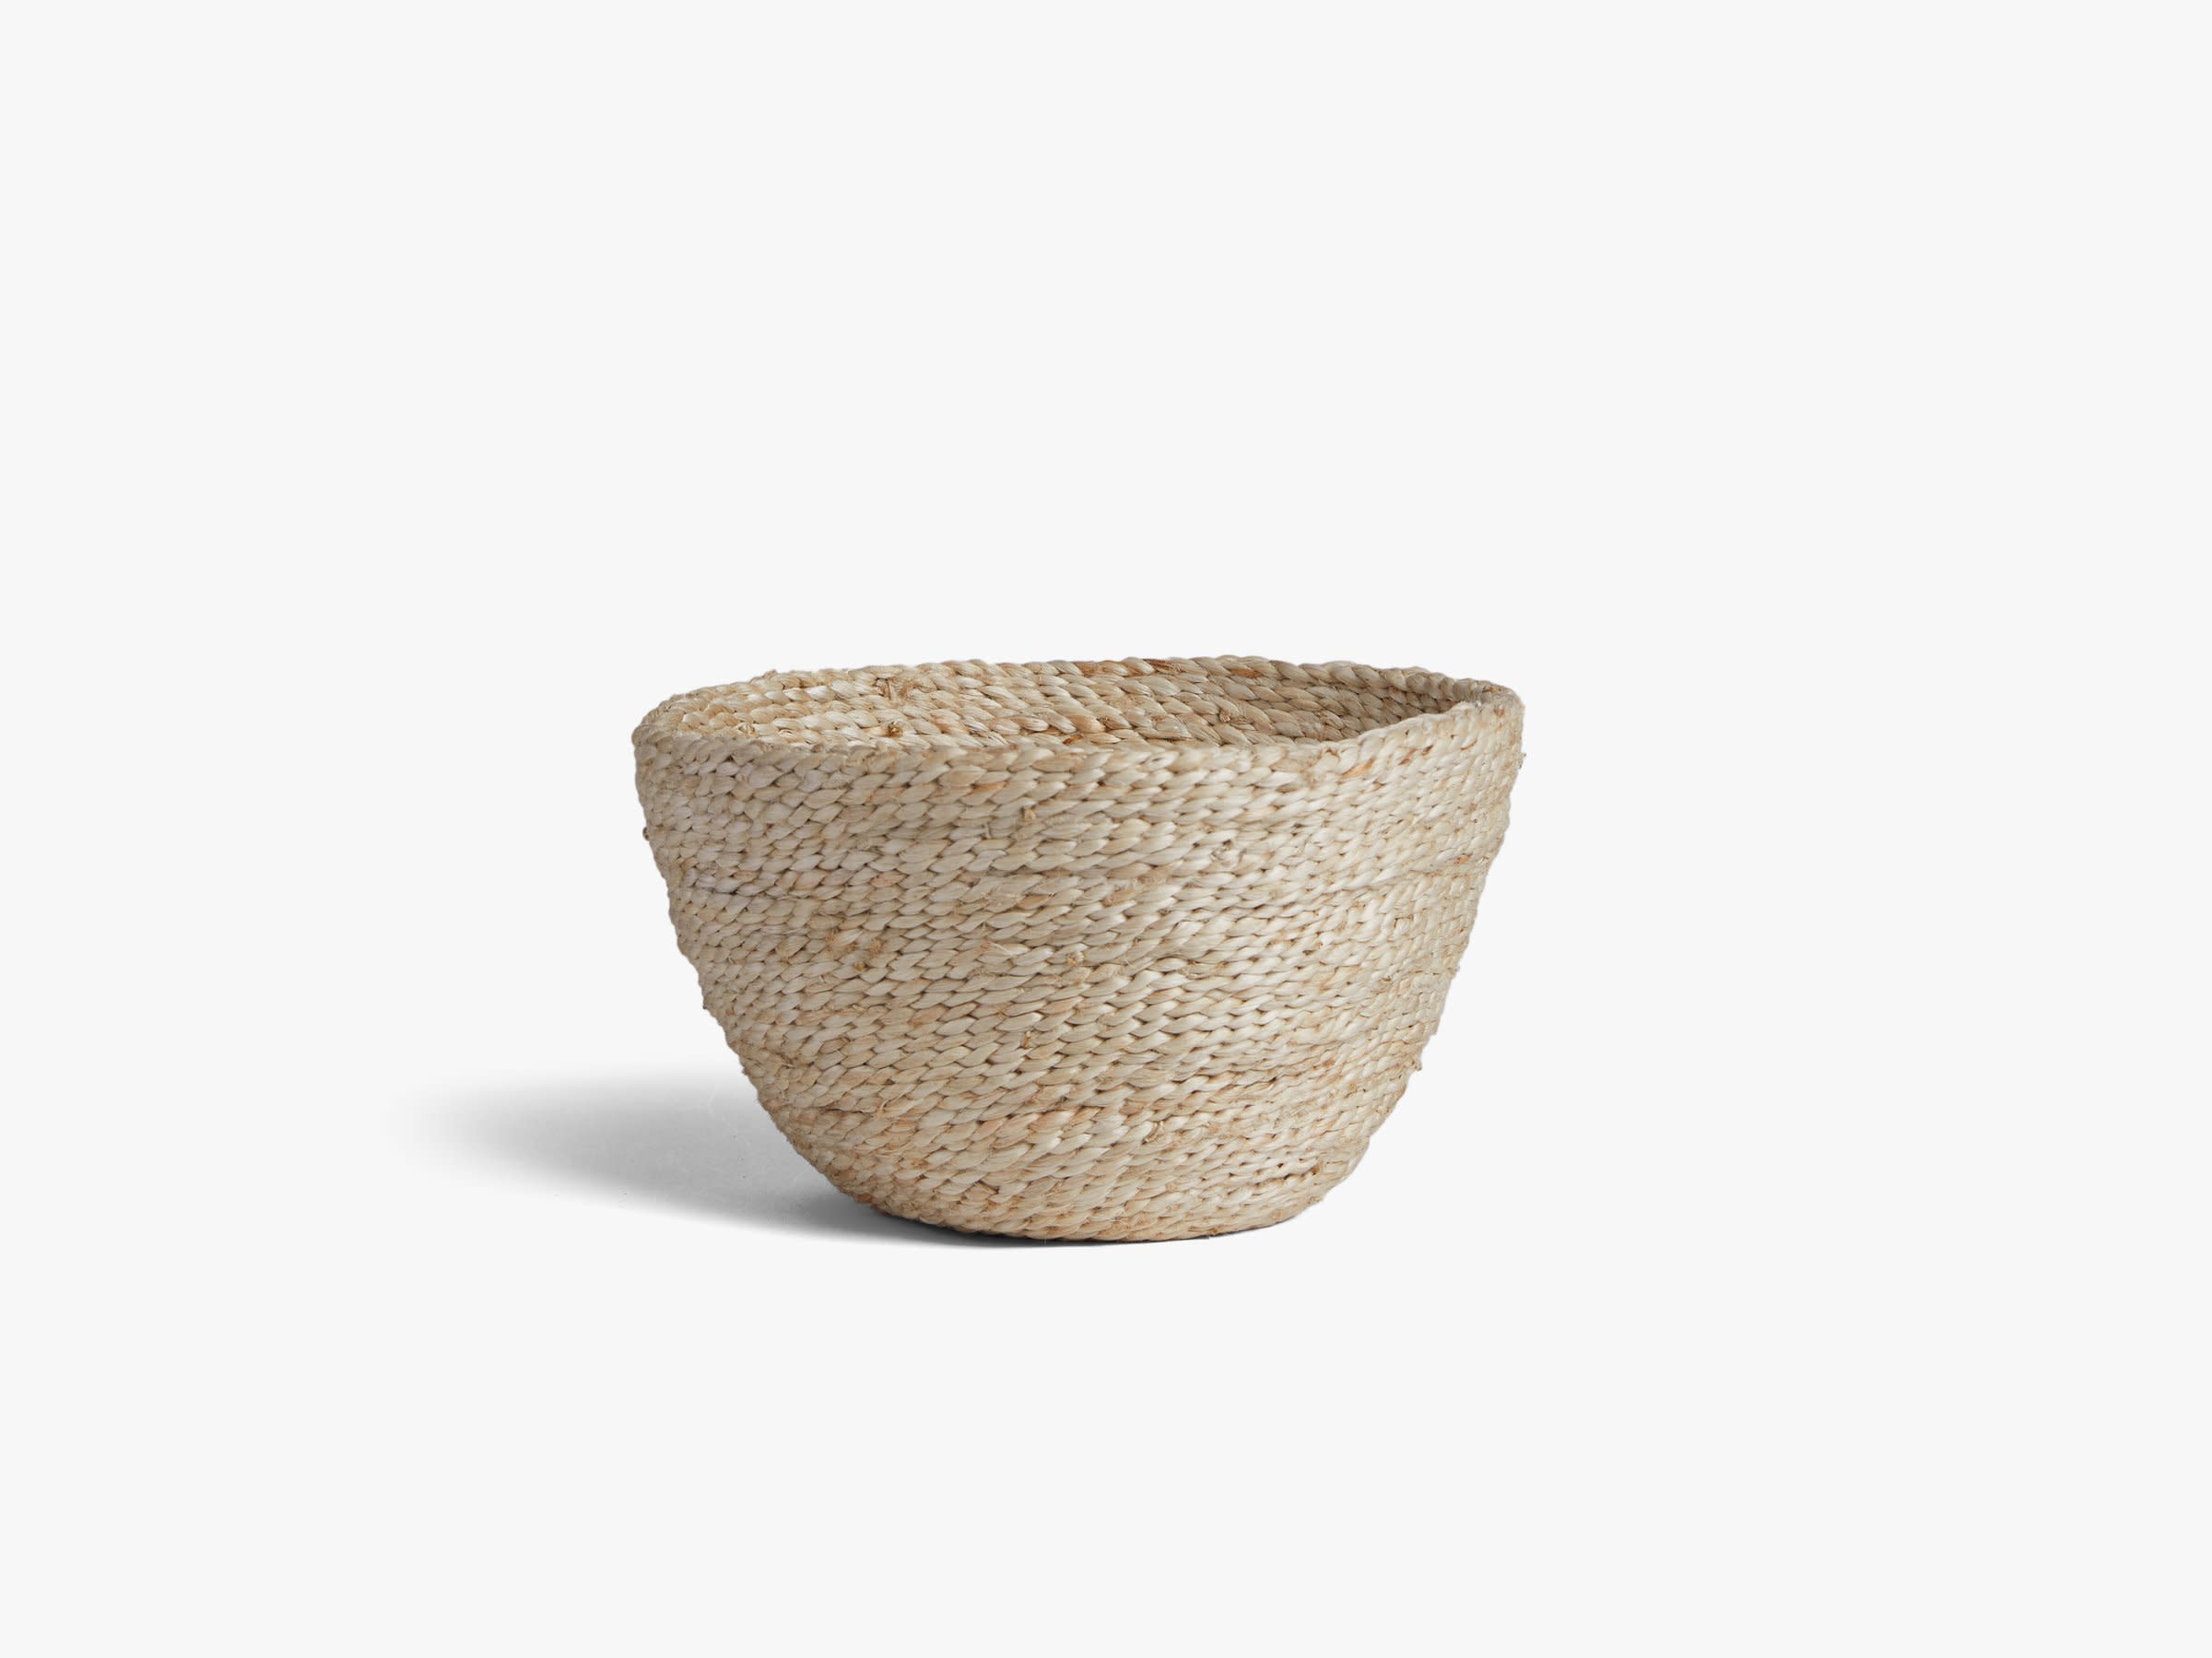 Minikin Bowl Product Image